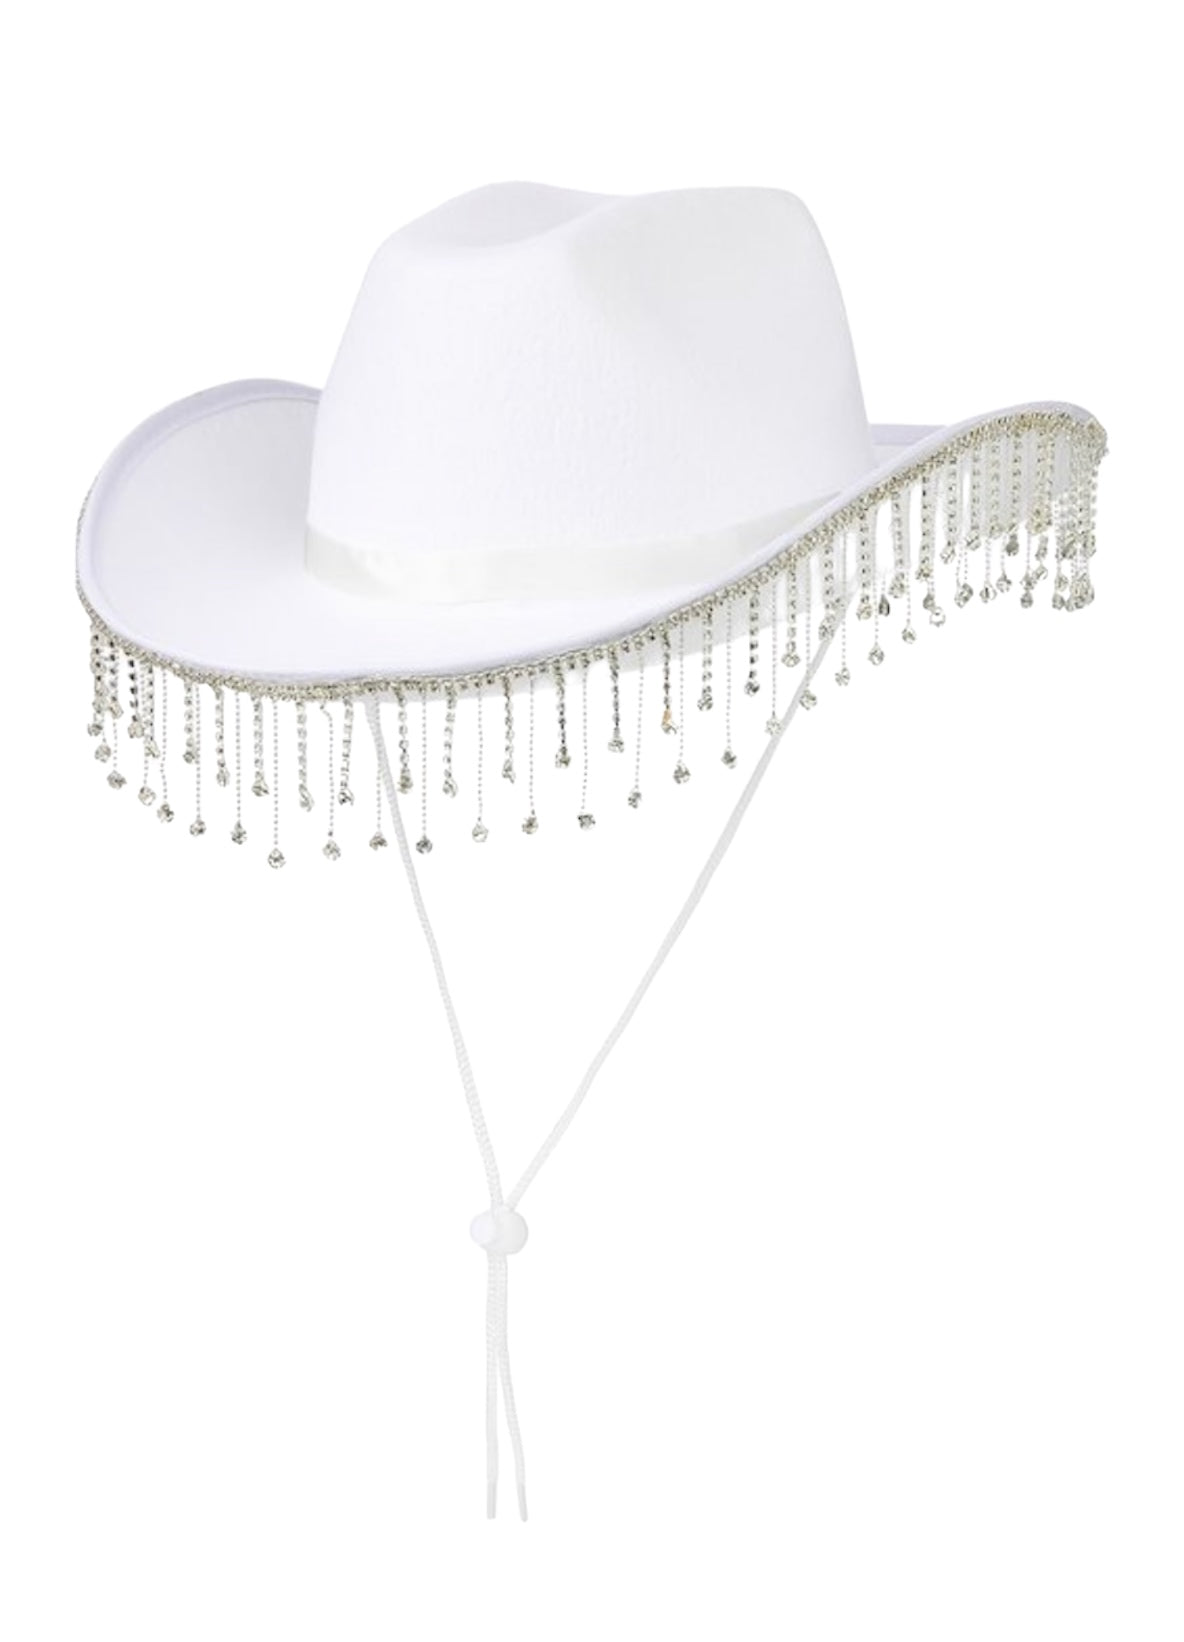 cowboy hat, white hat, bling, bling hat, rhinestone hat,